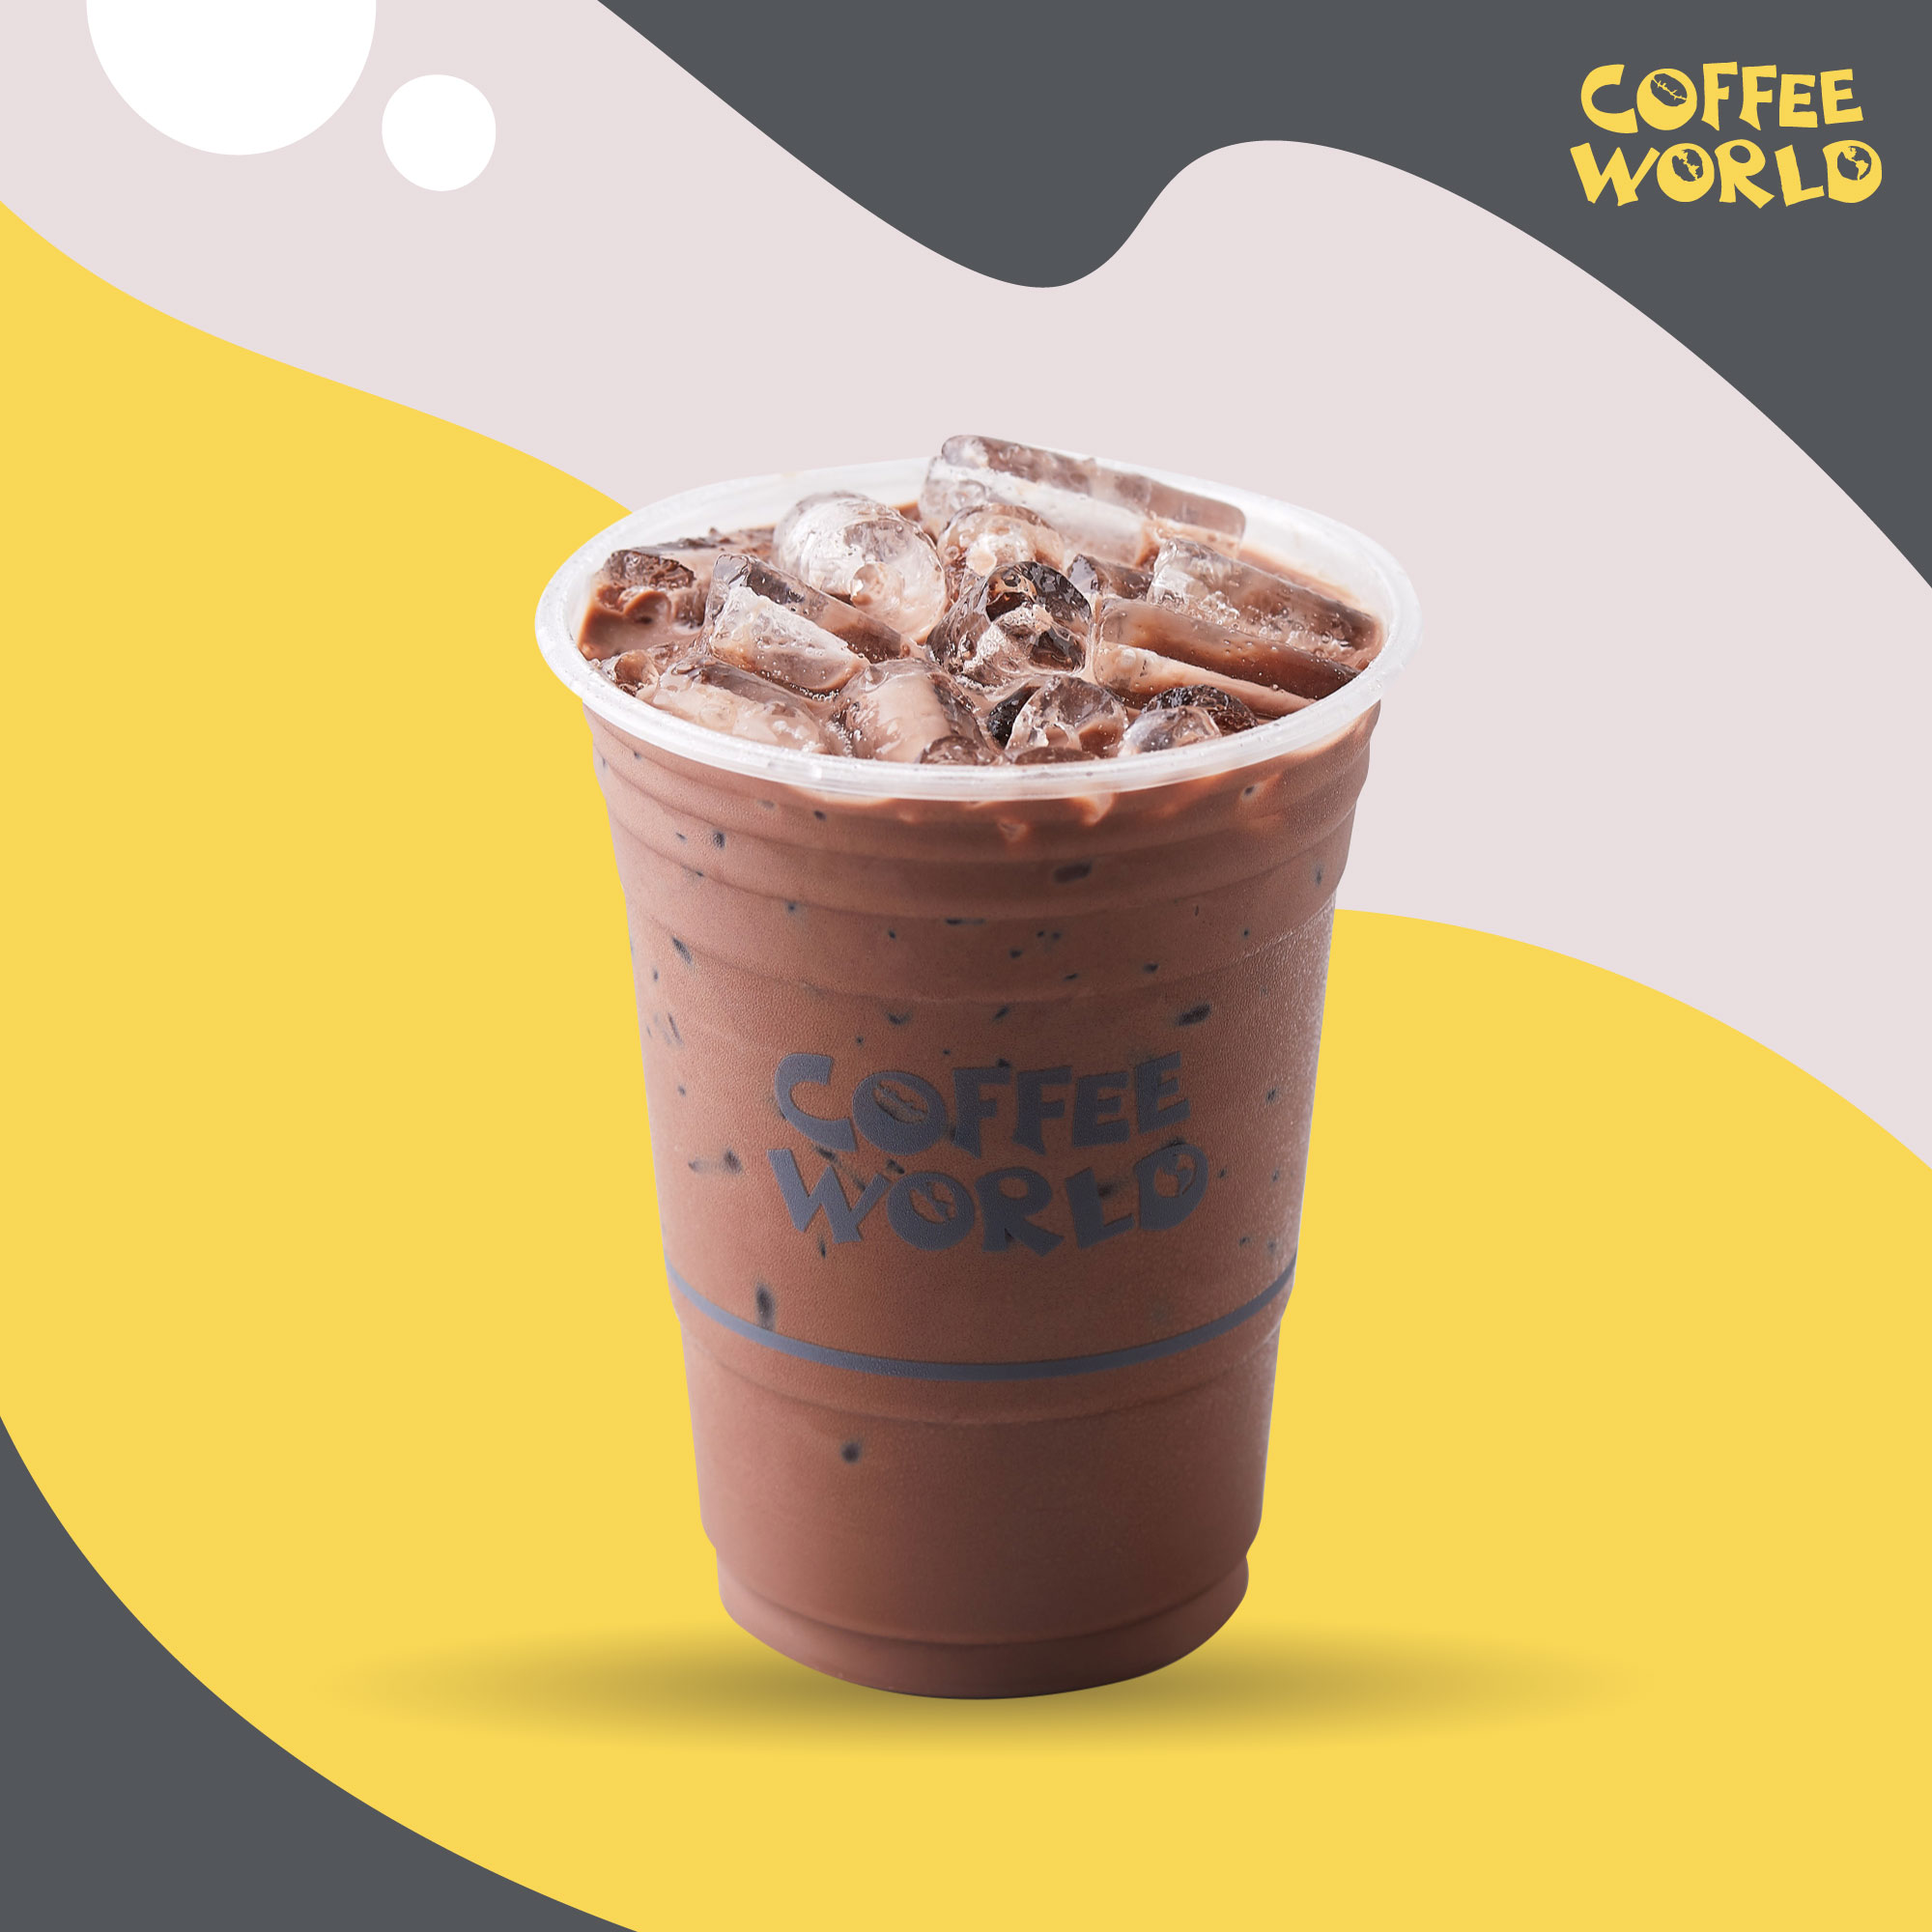 E-Voucher Iced Chocolate Coffee World ไอซ์ ช็อคโกแลต